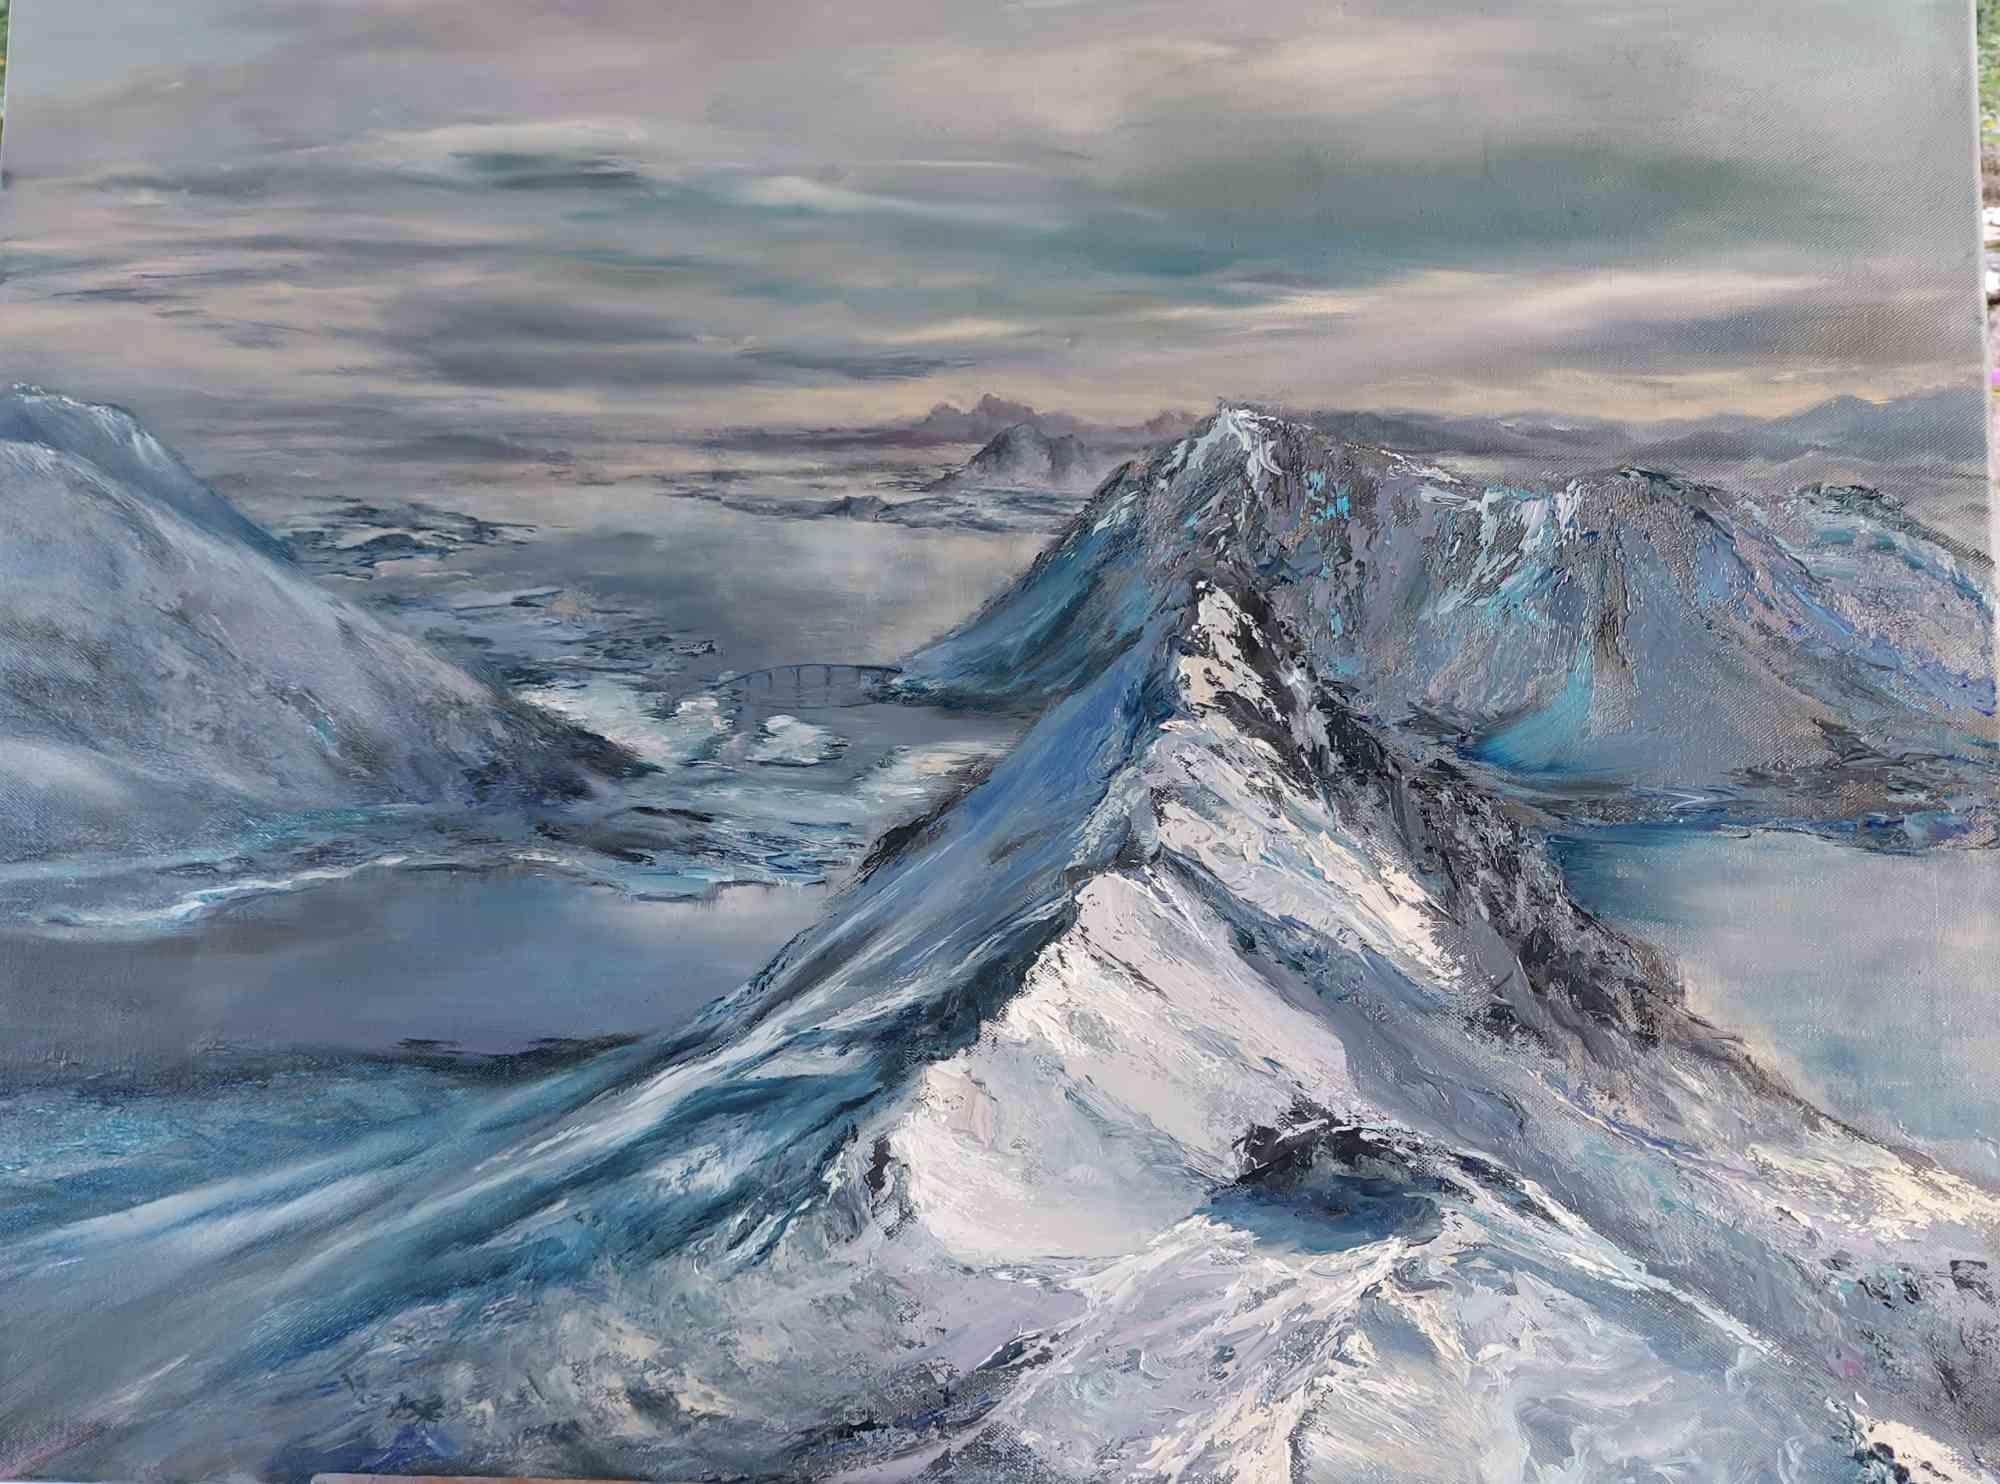 Icy Mountains - Oil Painting by Elena Mardashova - 2020